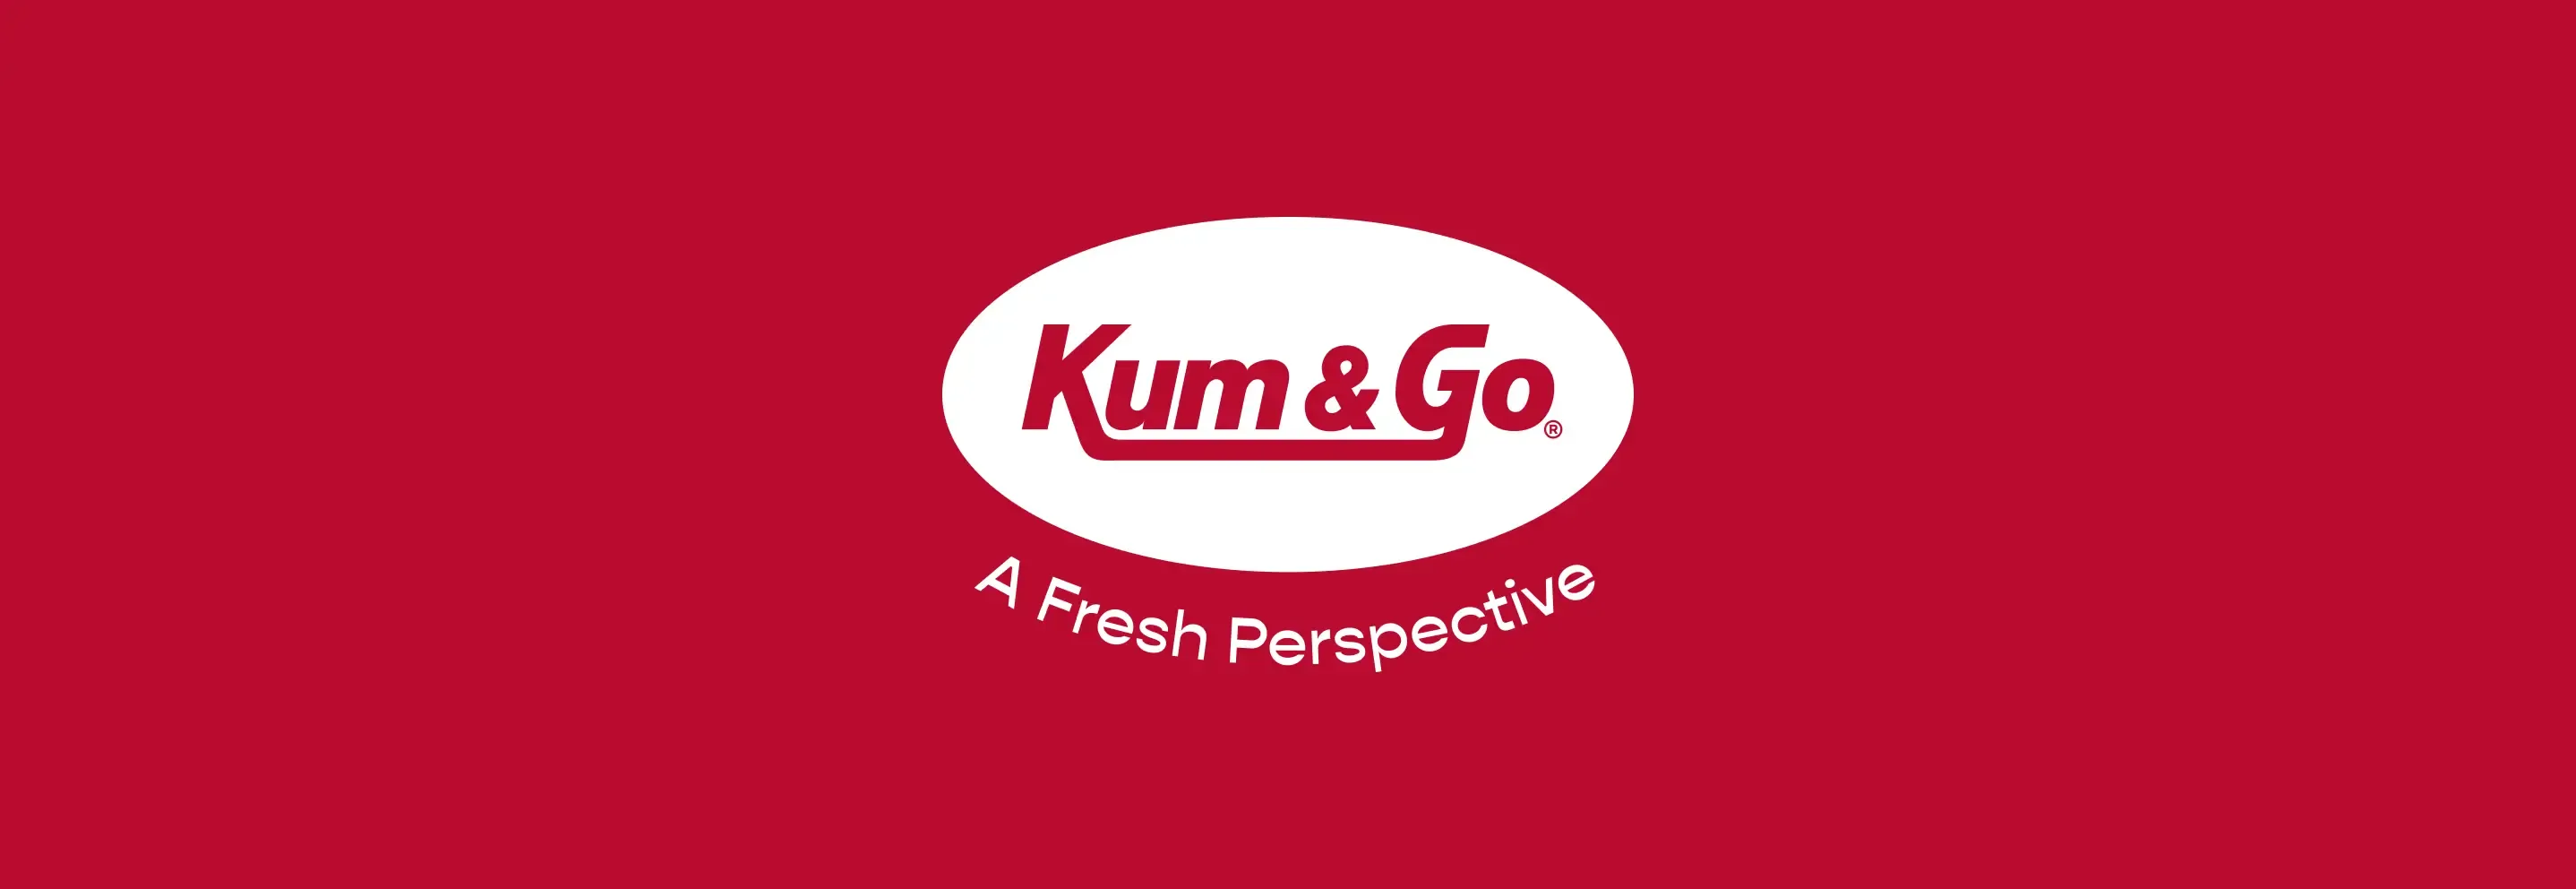 Kum & Go selects Myplanet for Mobile Commerce Digital Transformation